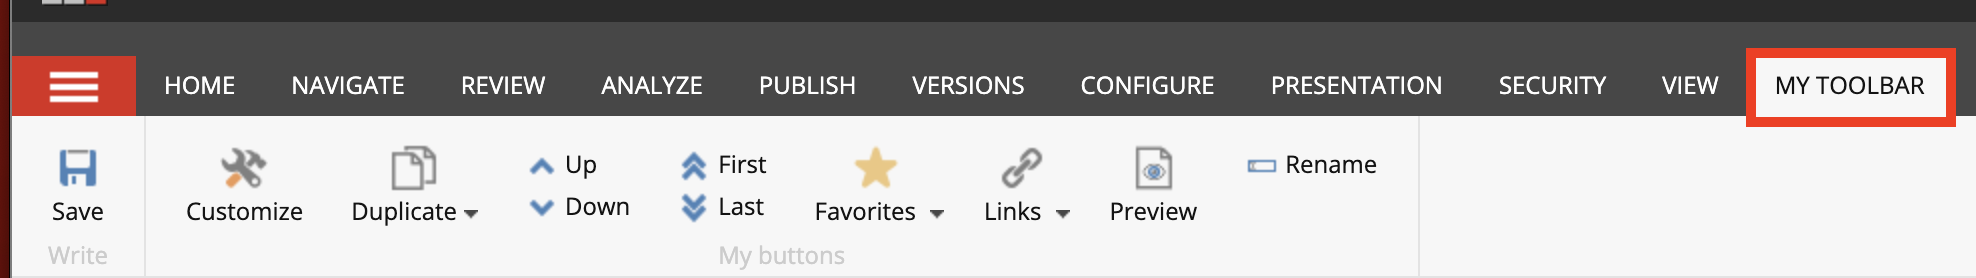 Customized My Toolbar in Sitecore